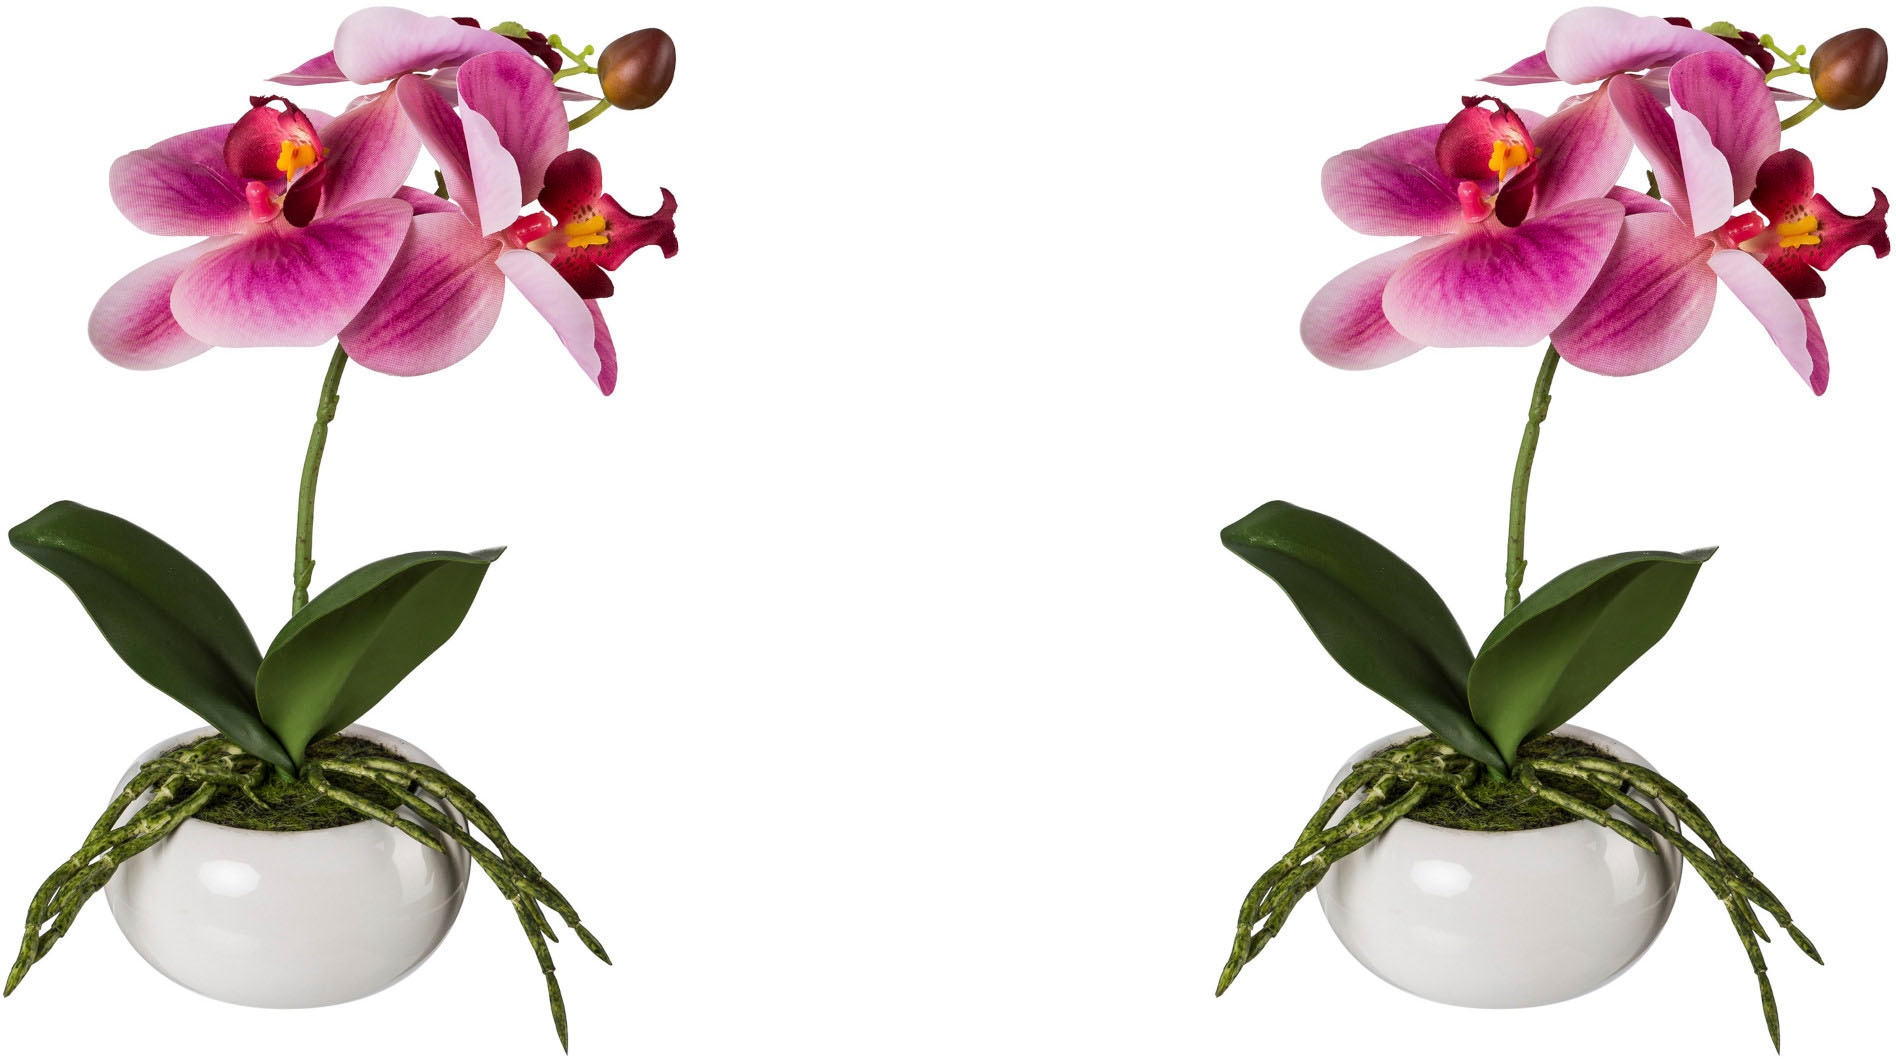 Creativ green Kunstorchidee »Phalaenopsis in Keramikschale«, mit Real-Touch-Blüten